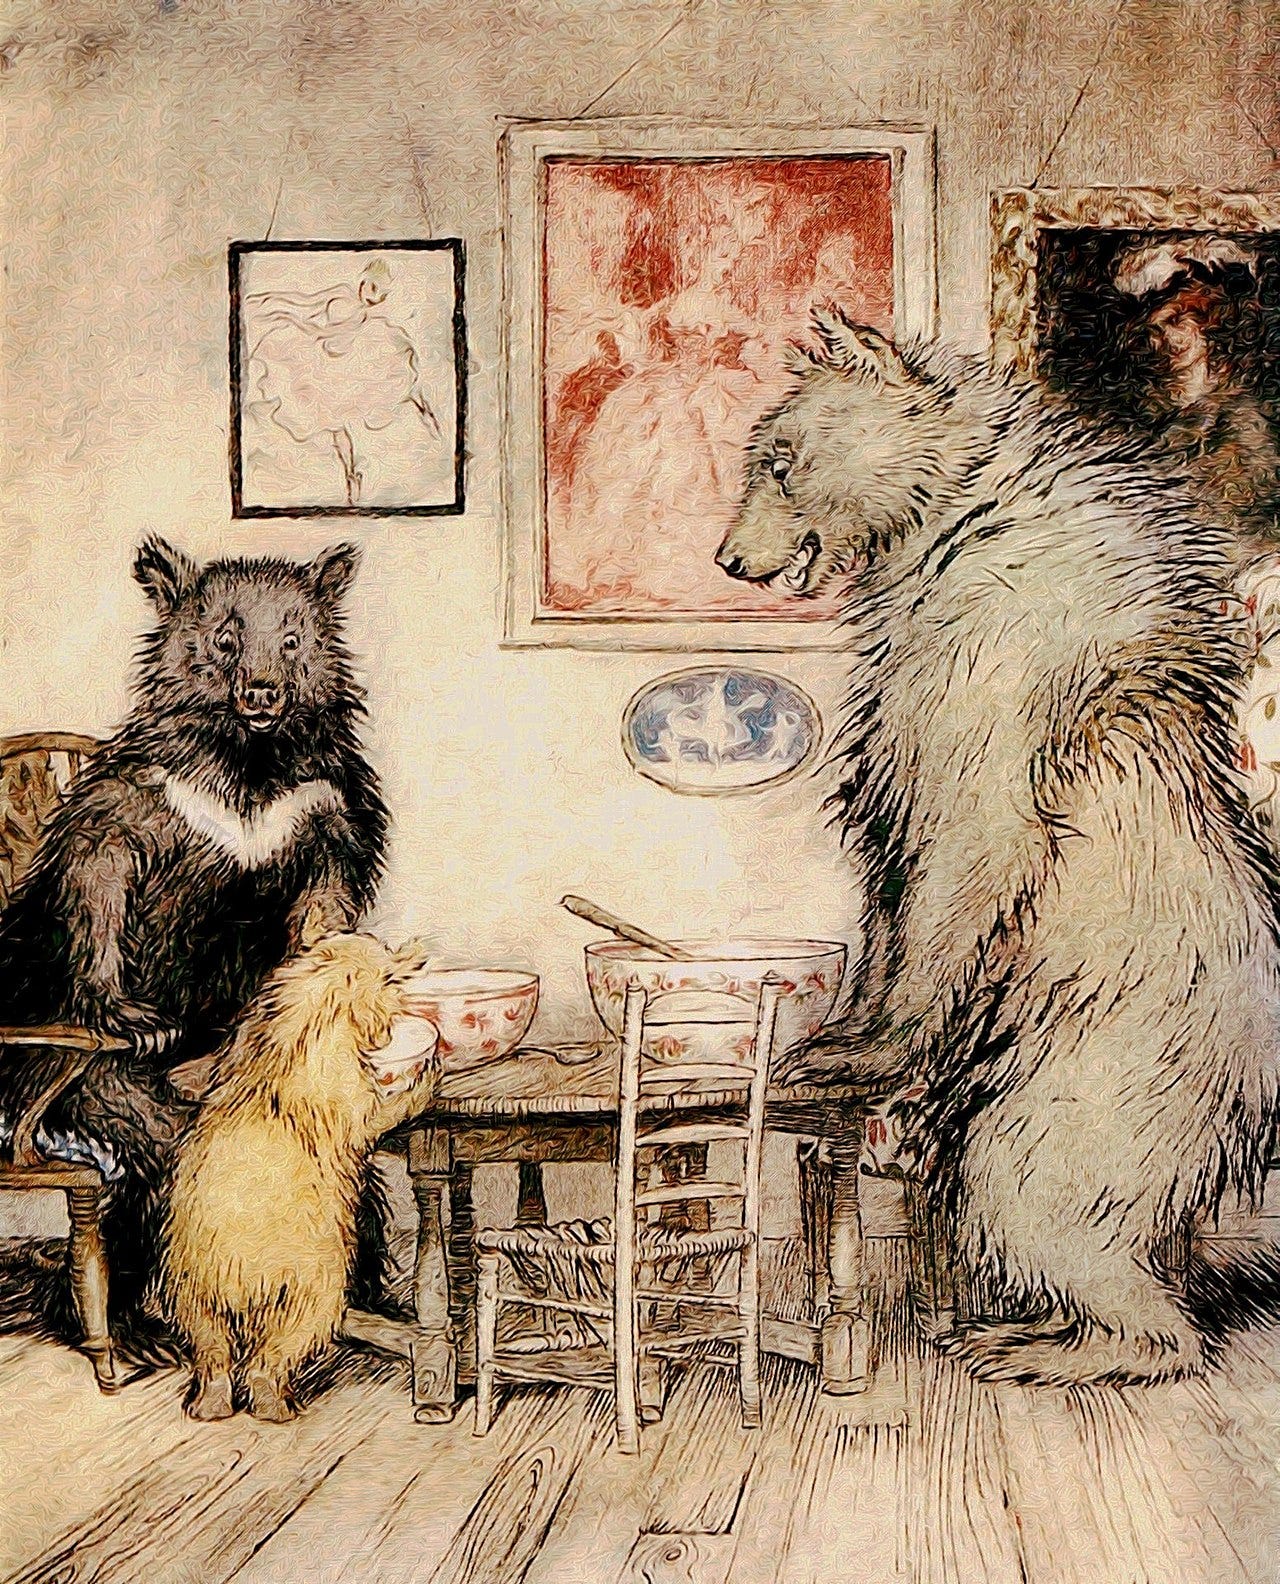 Mama, baby, and papa bear around a table eating their porridge.